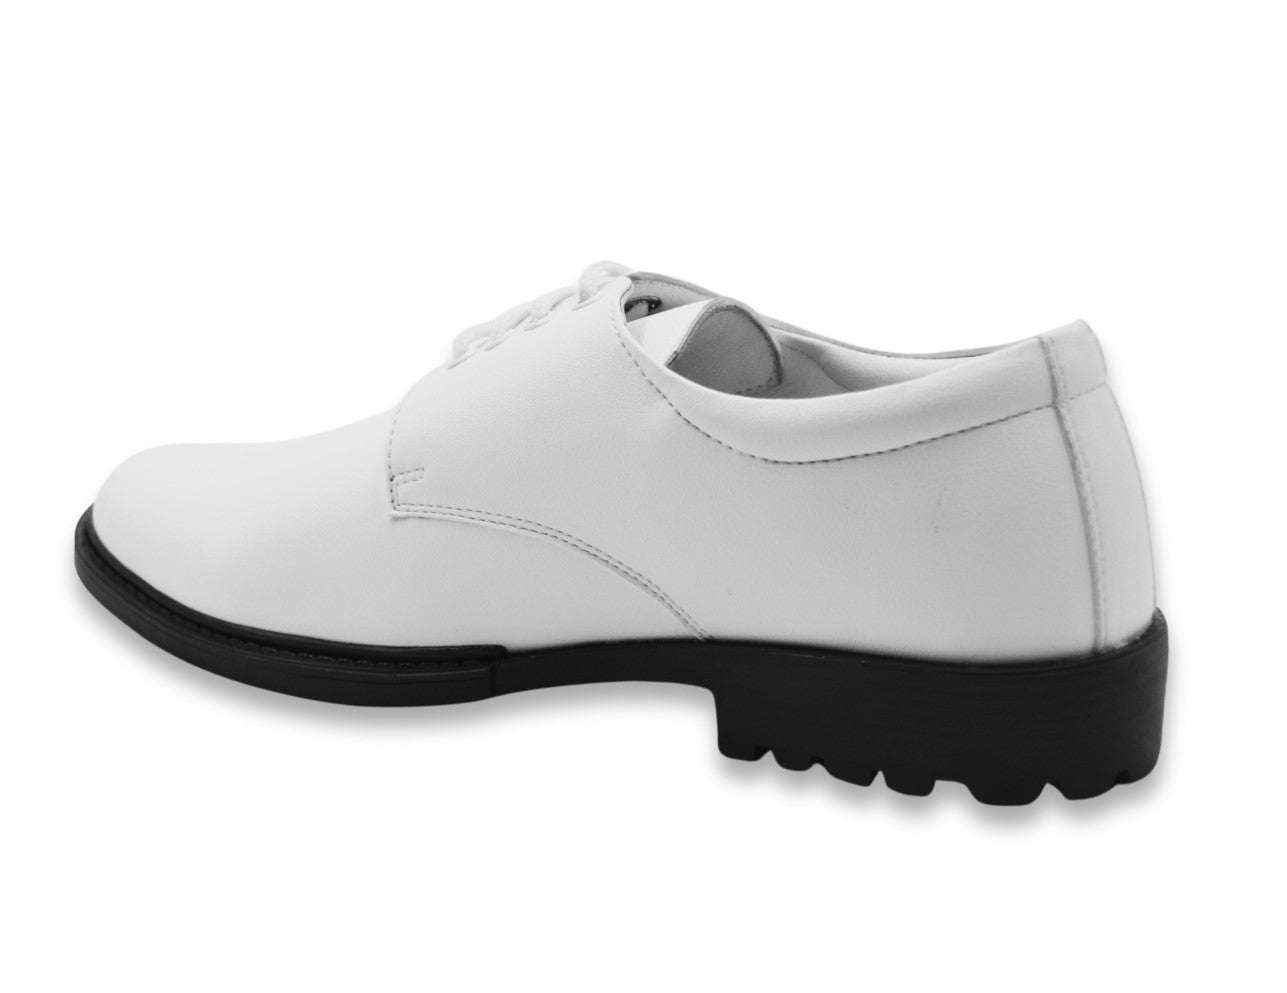 Shoes PU-coated Microfiber White Uniform